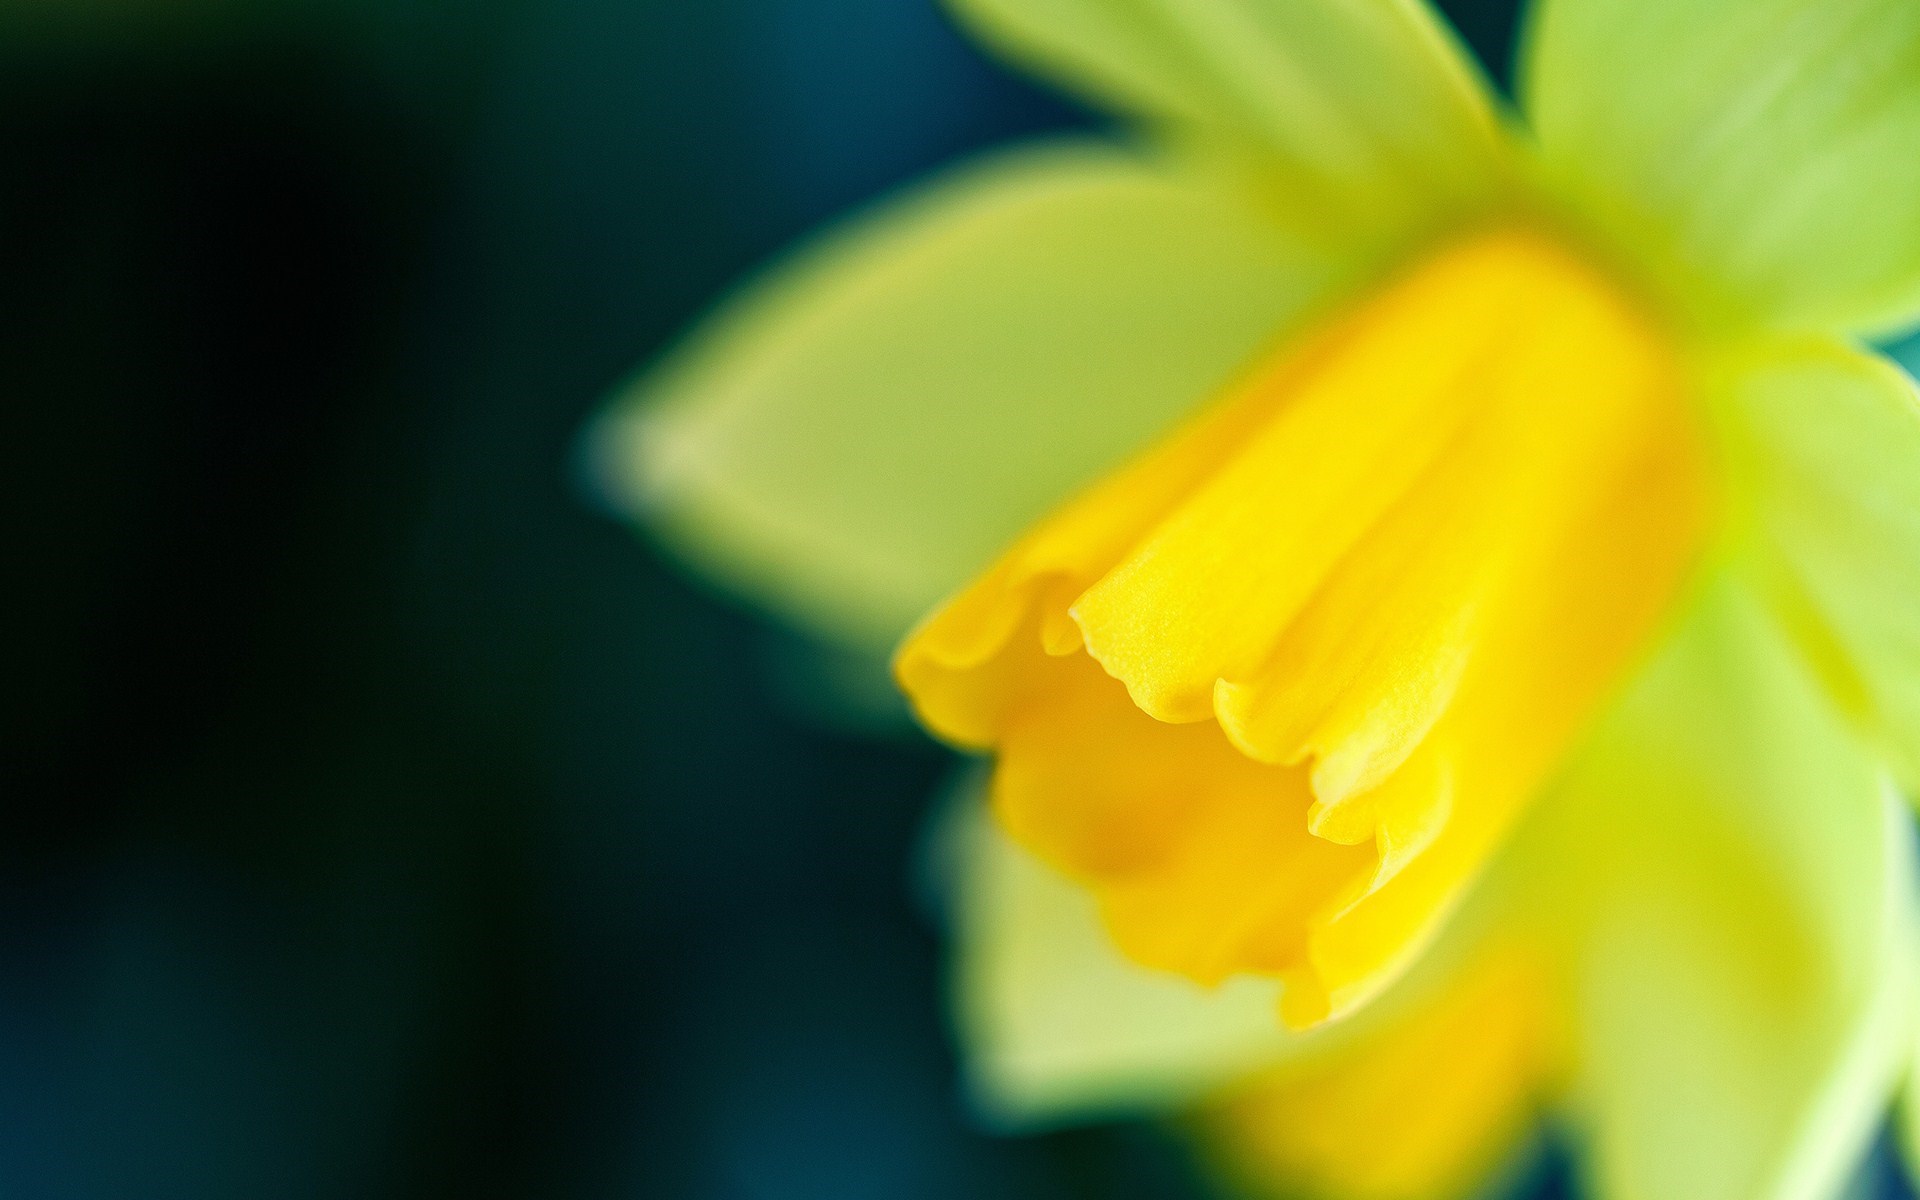 Narcissus Daffodil Close Up